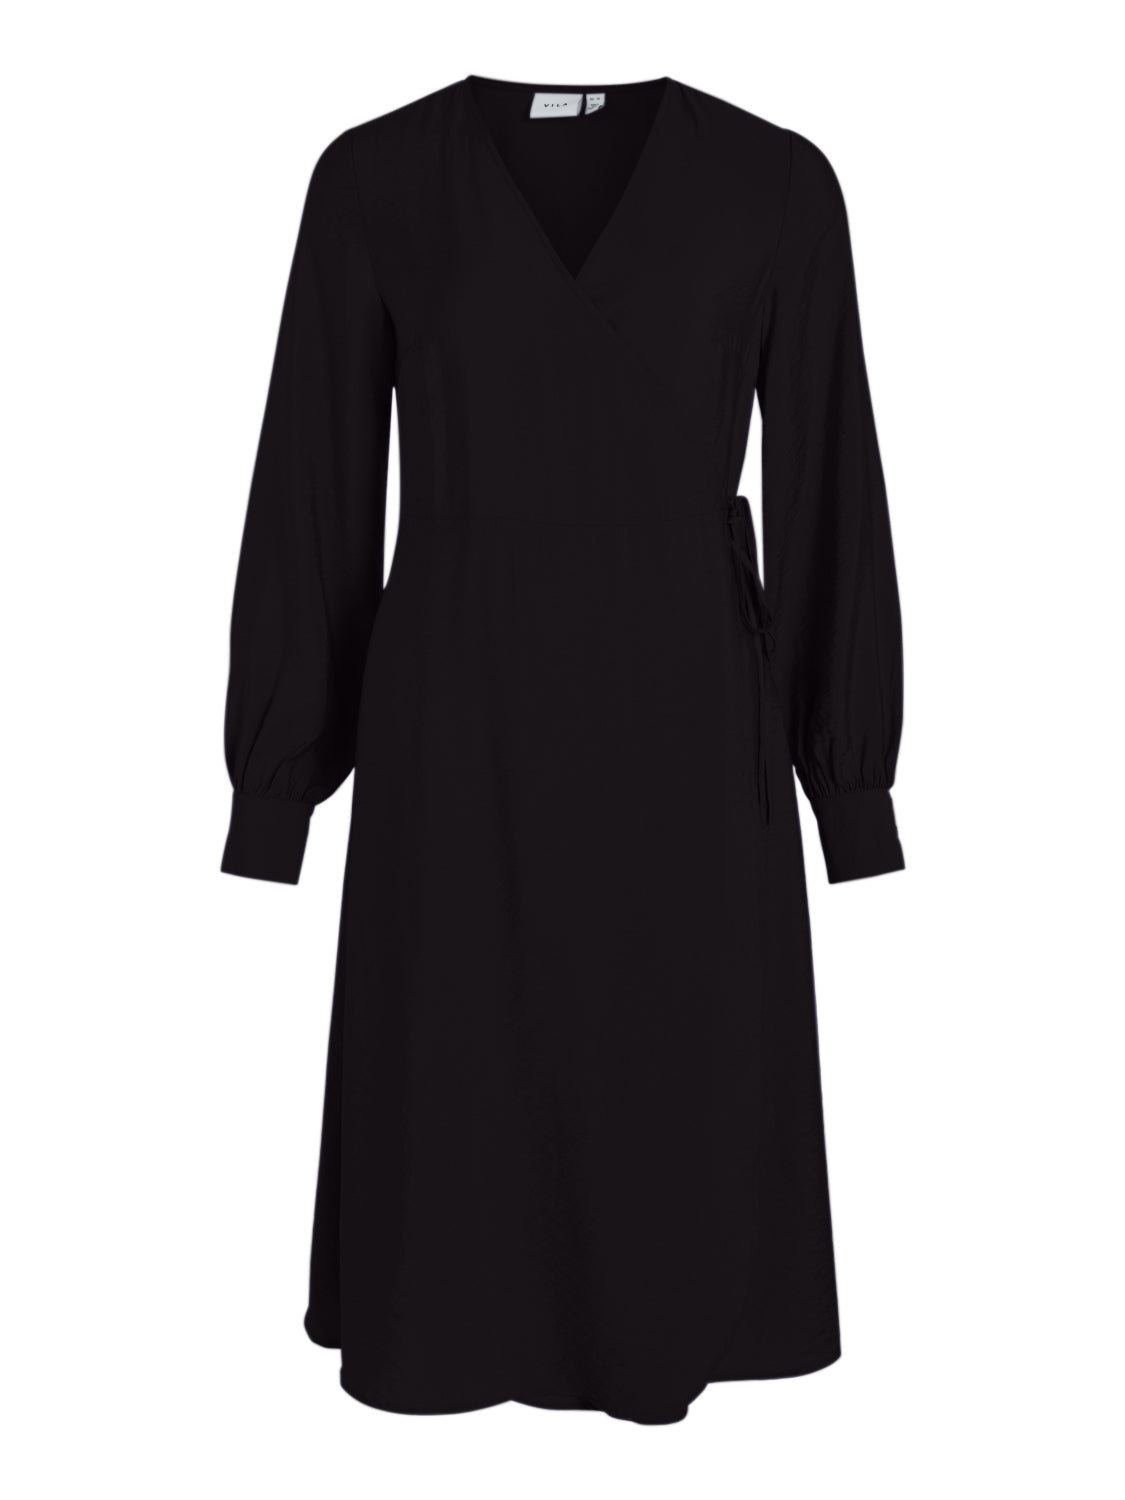 VILOLLO Dress - Black